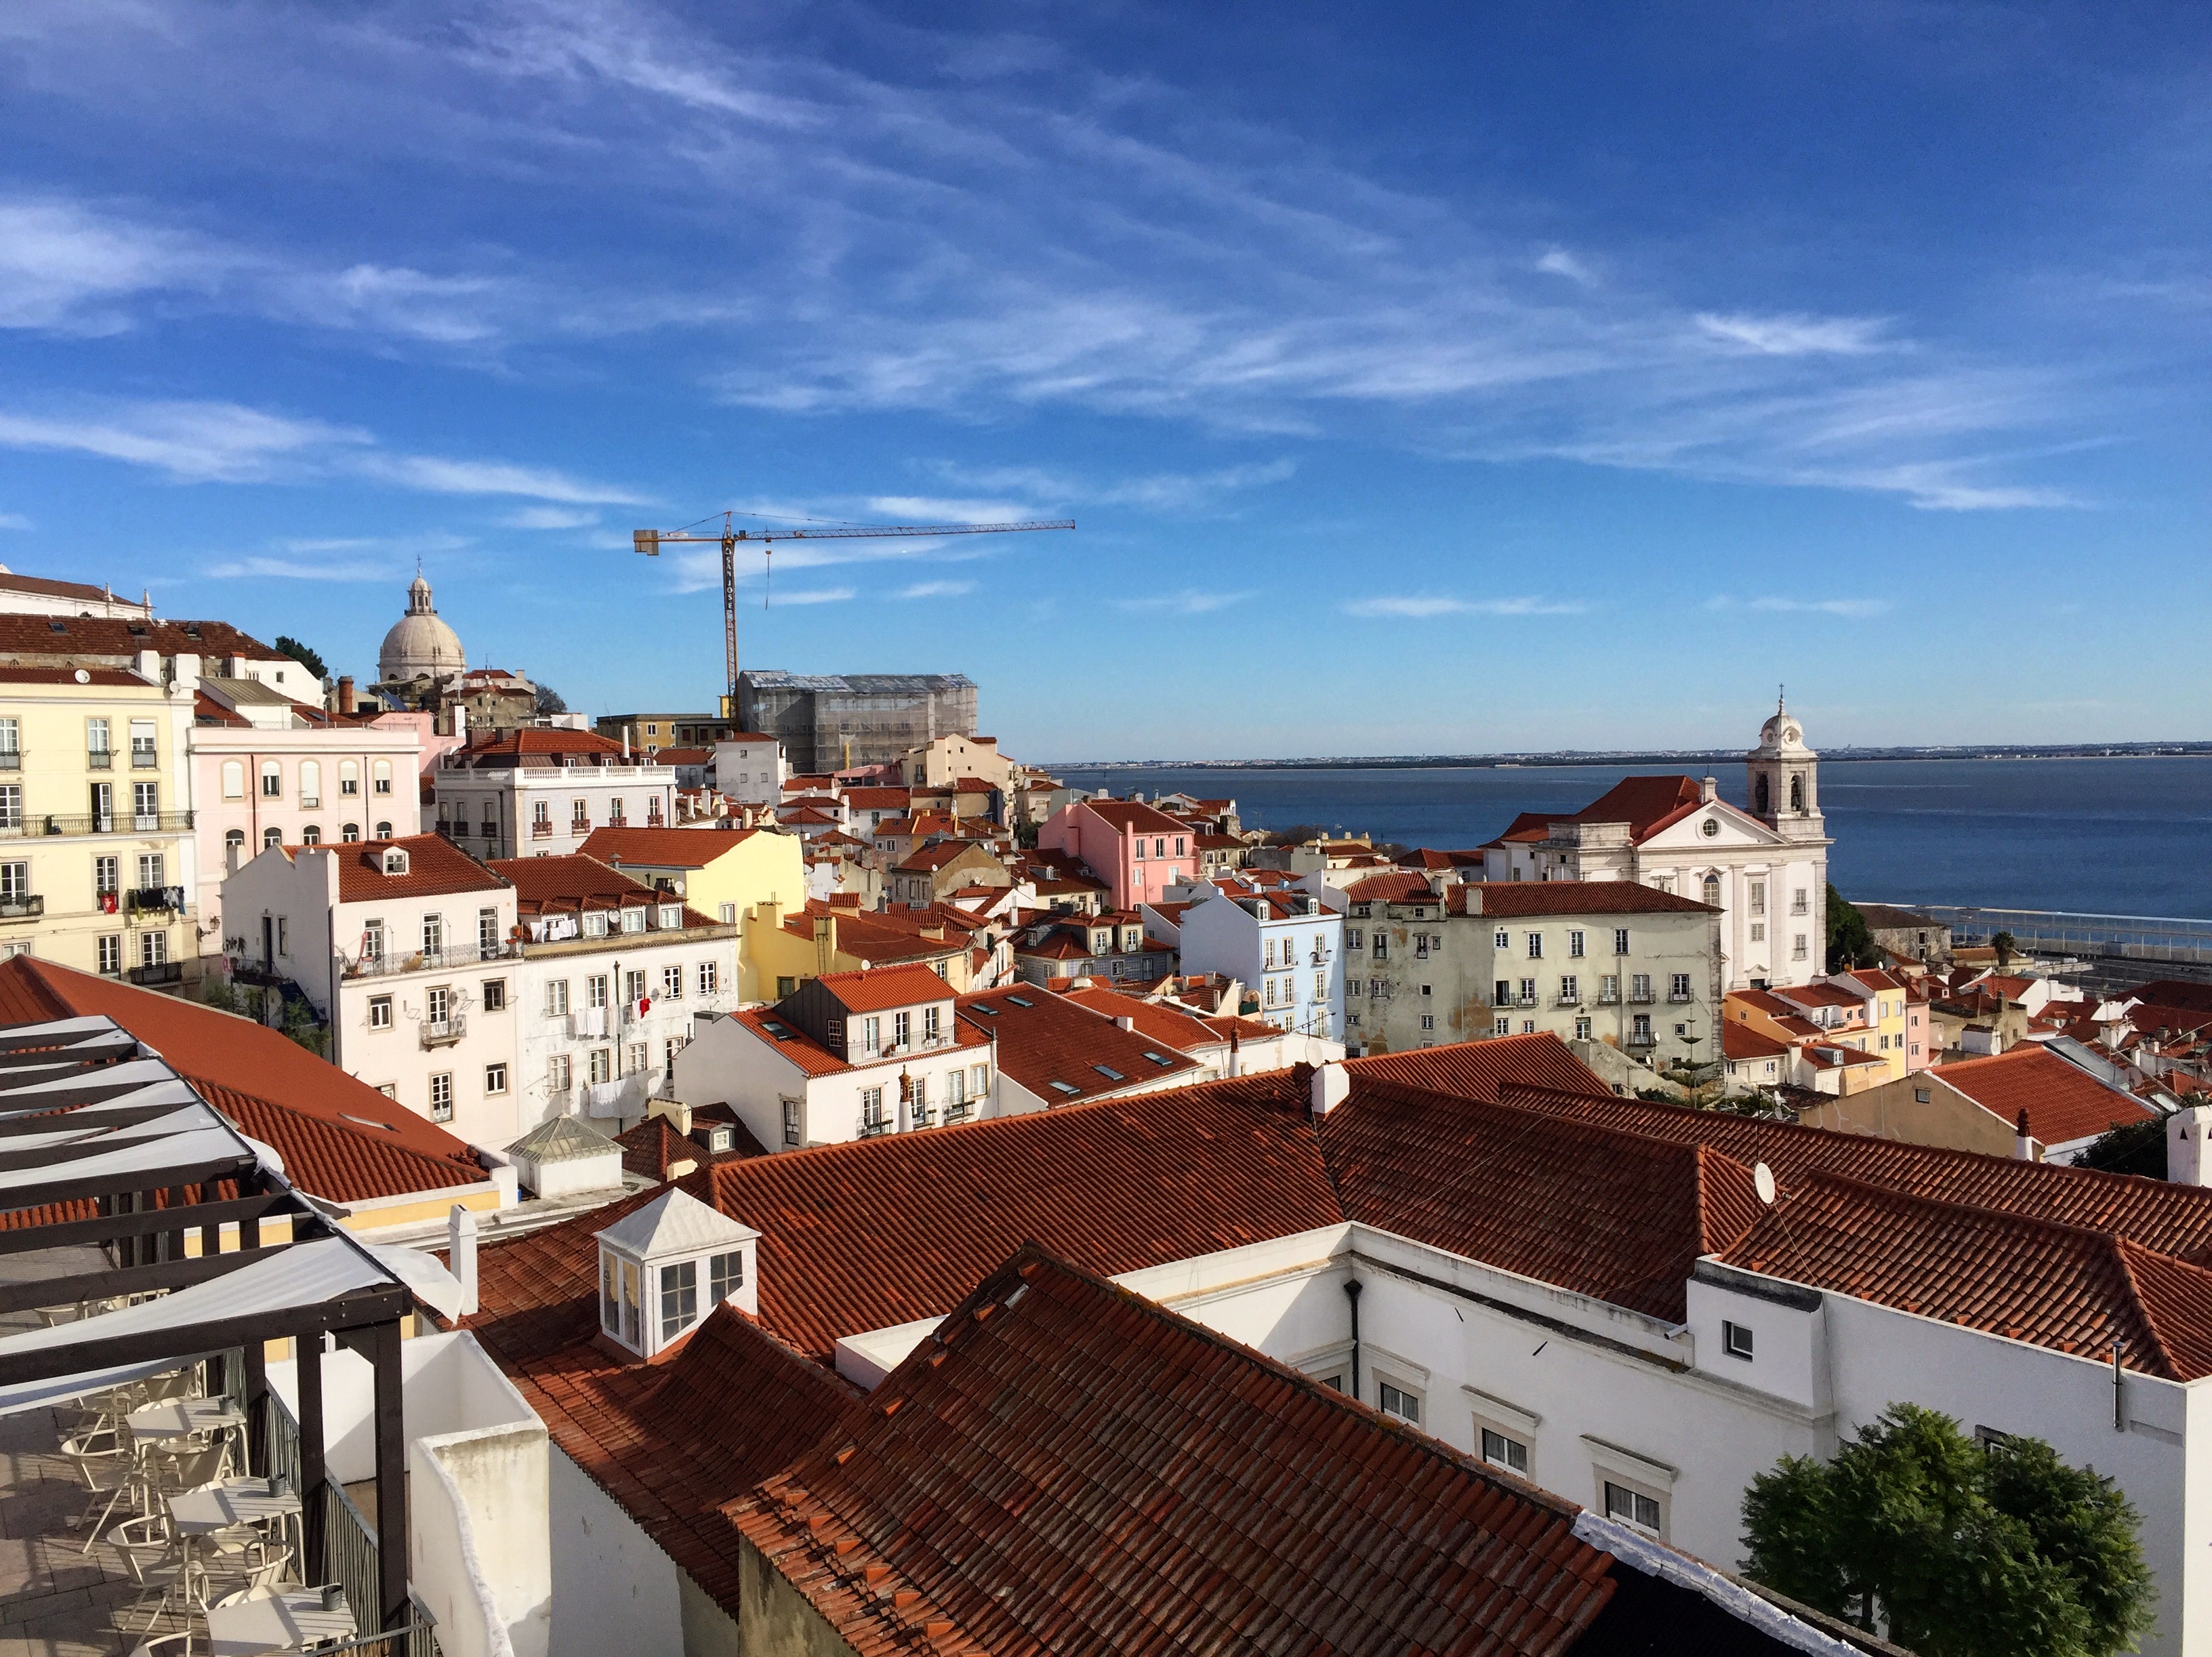 Destination: Lissabon, Portugal